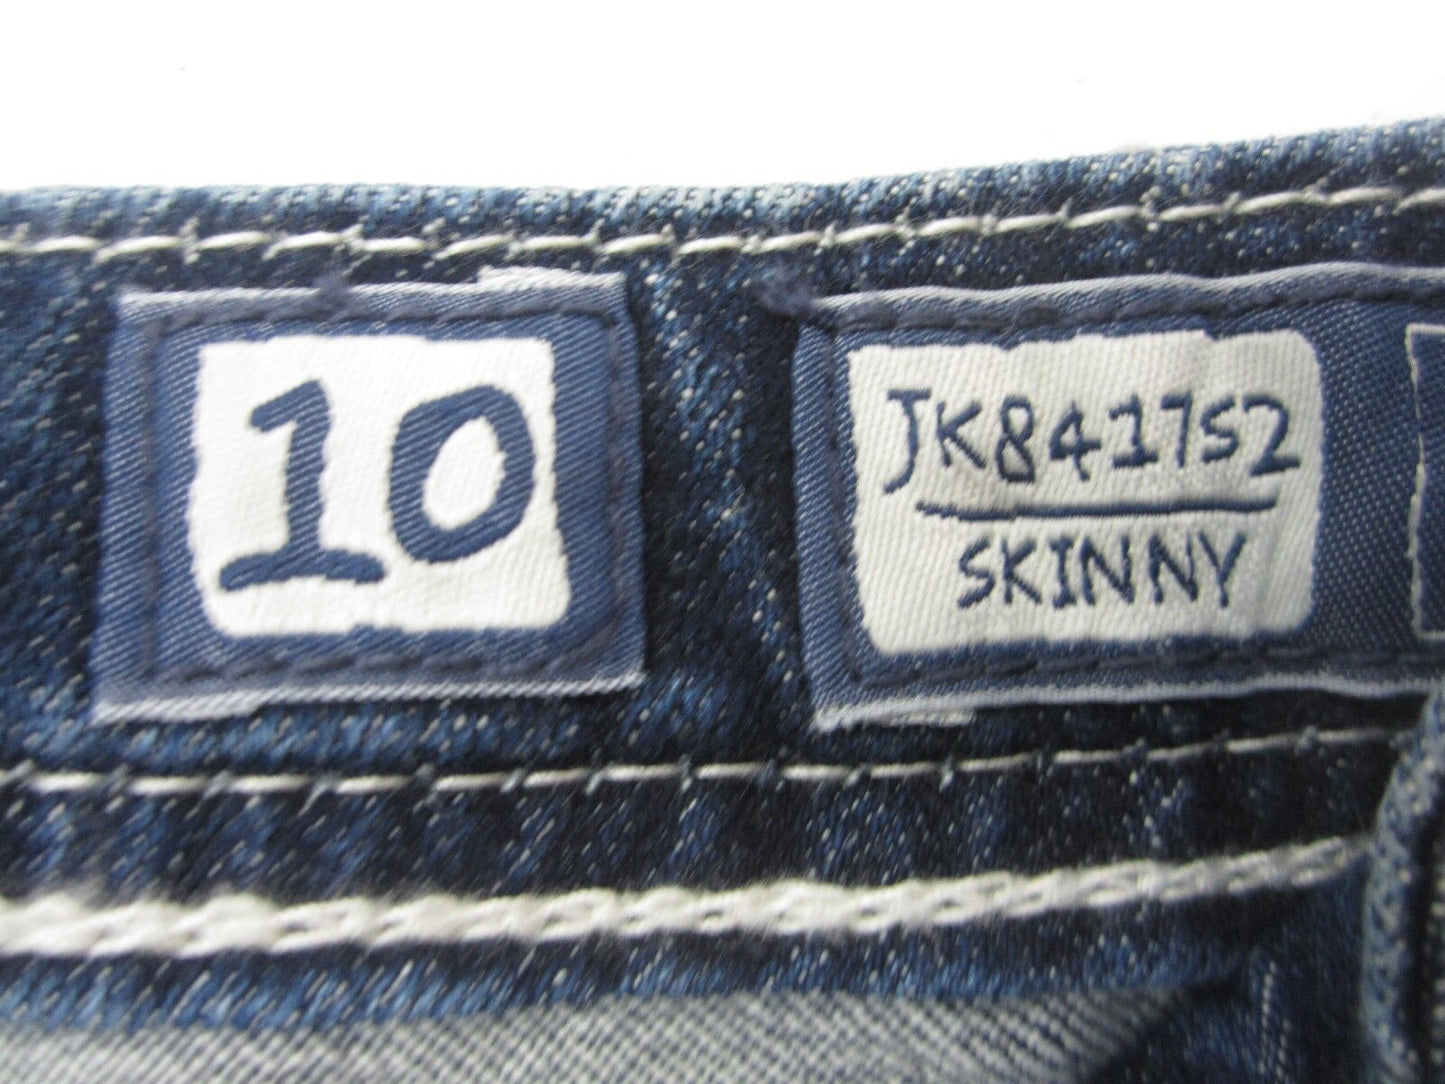 NWOT Girl's Miss Me Jeans JK8417S2 Flap Pocket Skinny Cute Bling Size 10 x 27